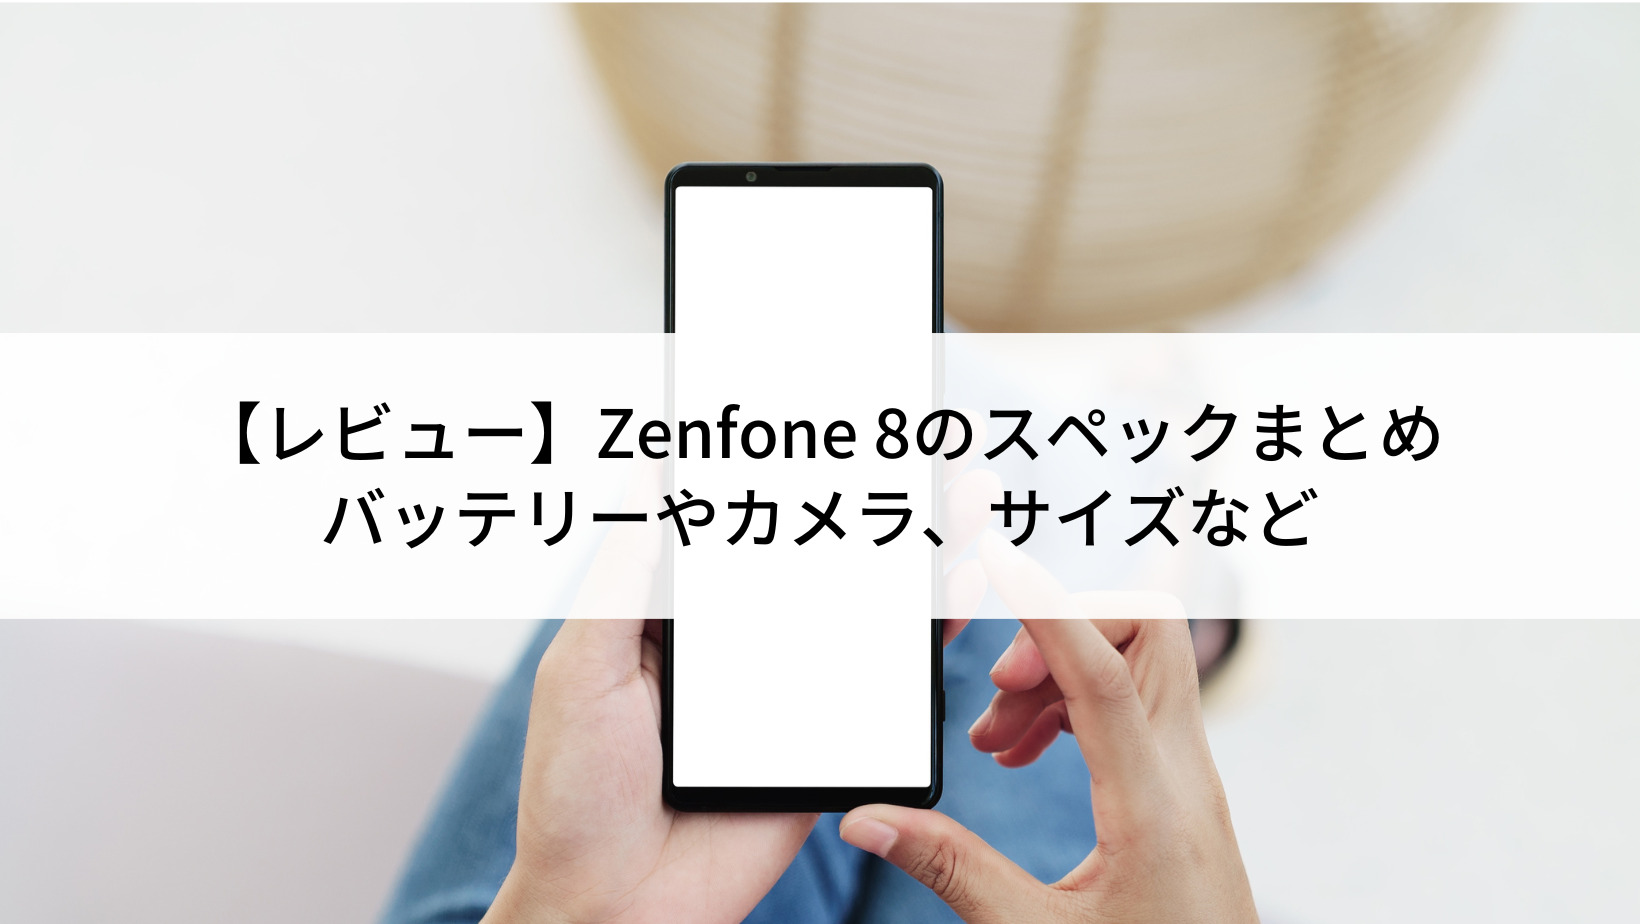 ZenFone 8の中古 | SIMフリーの中古スマホなら【にこスマ】